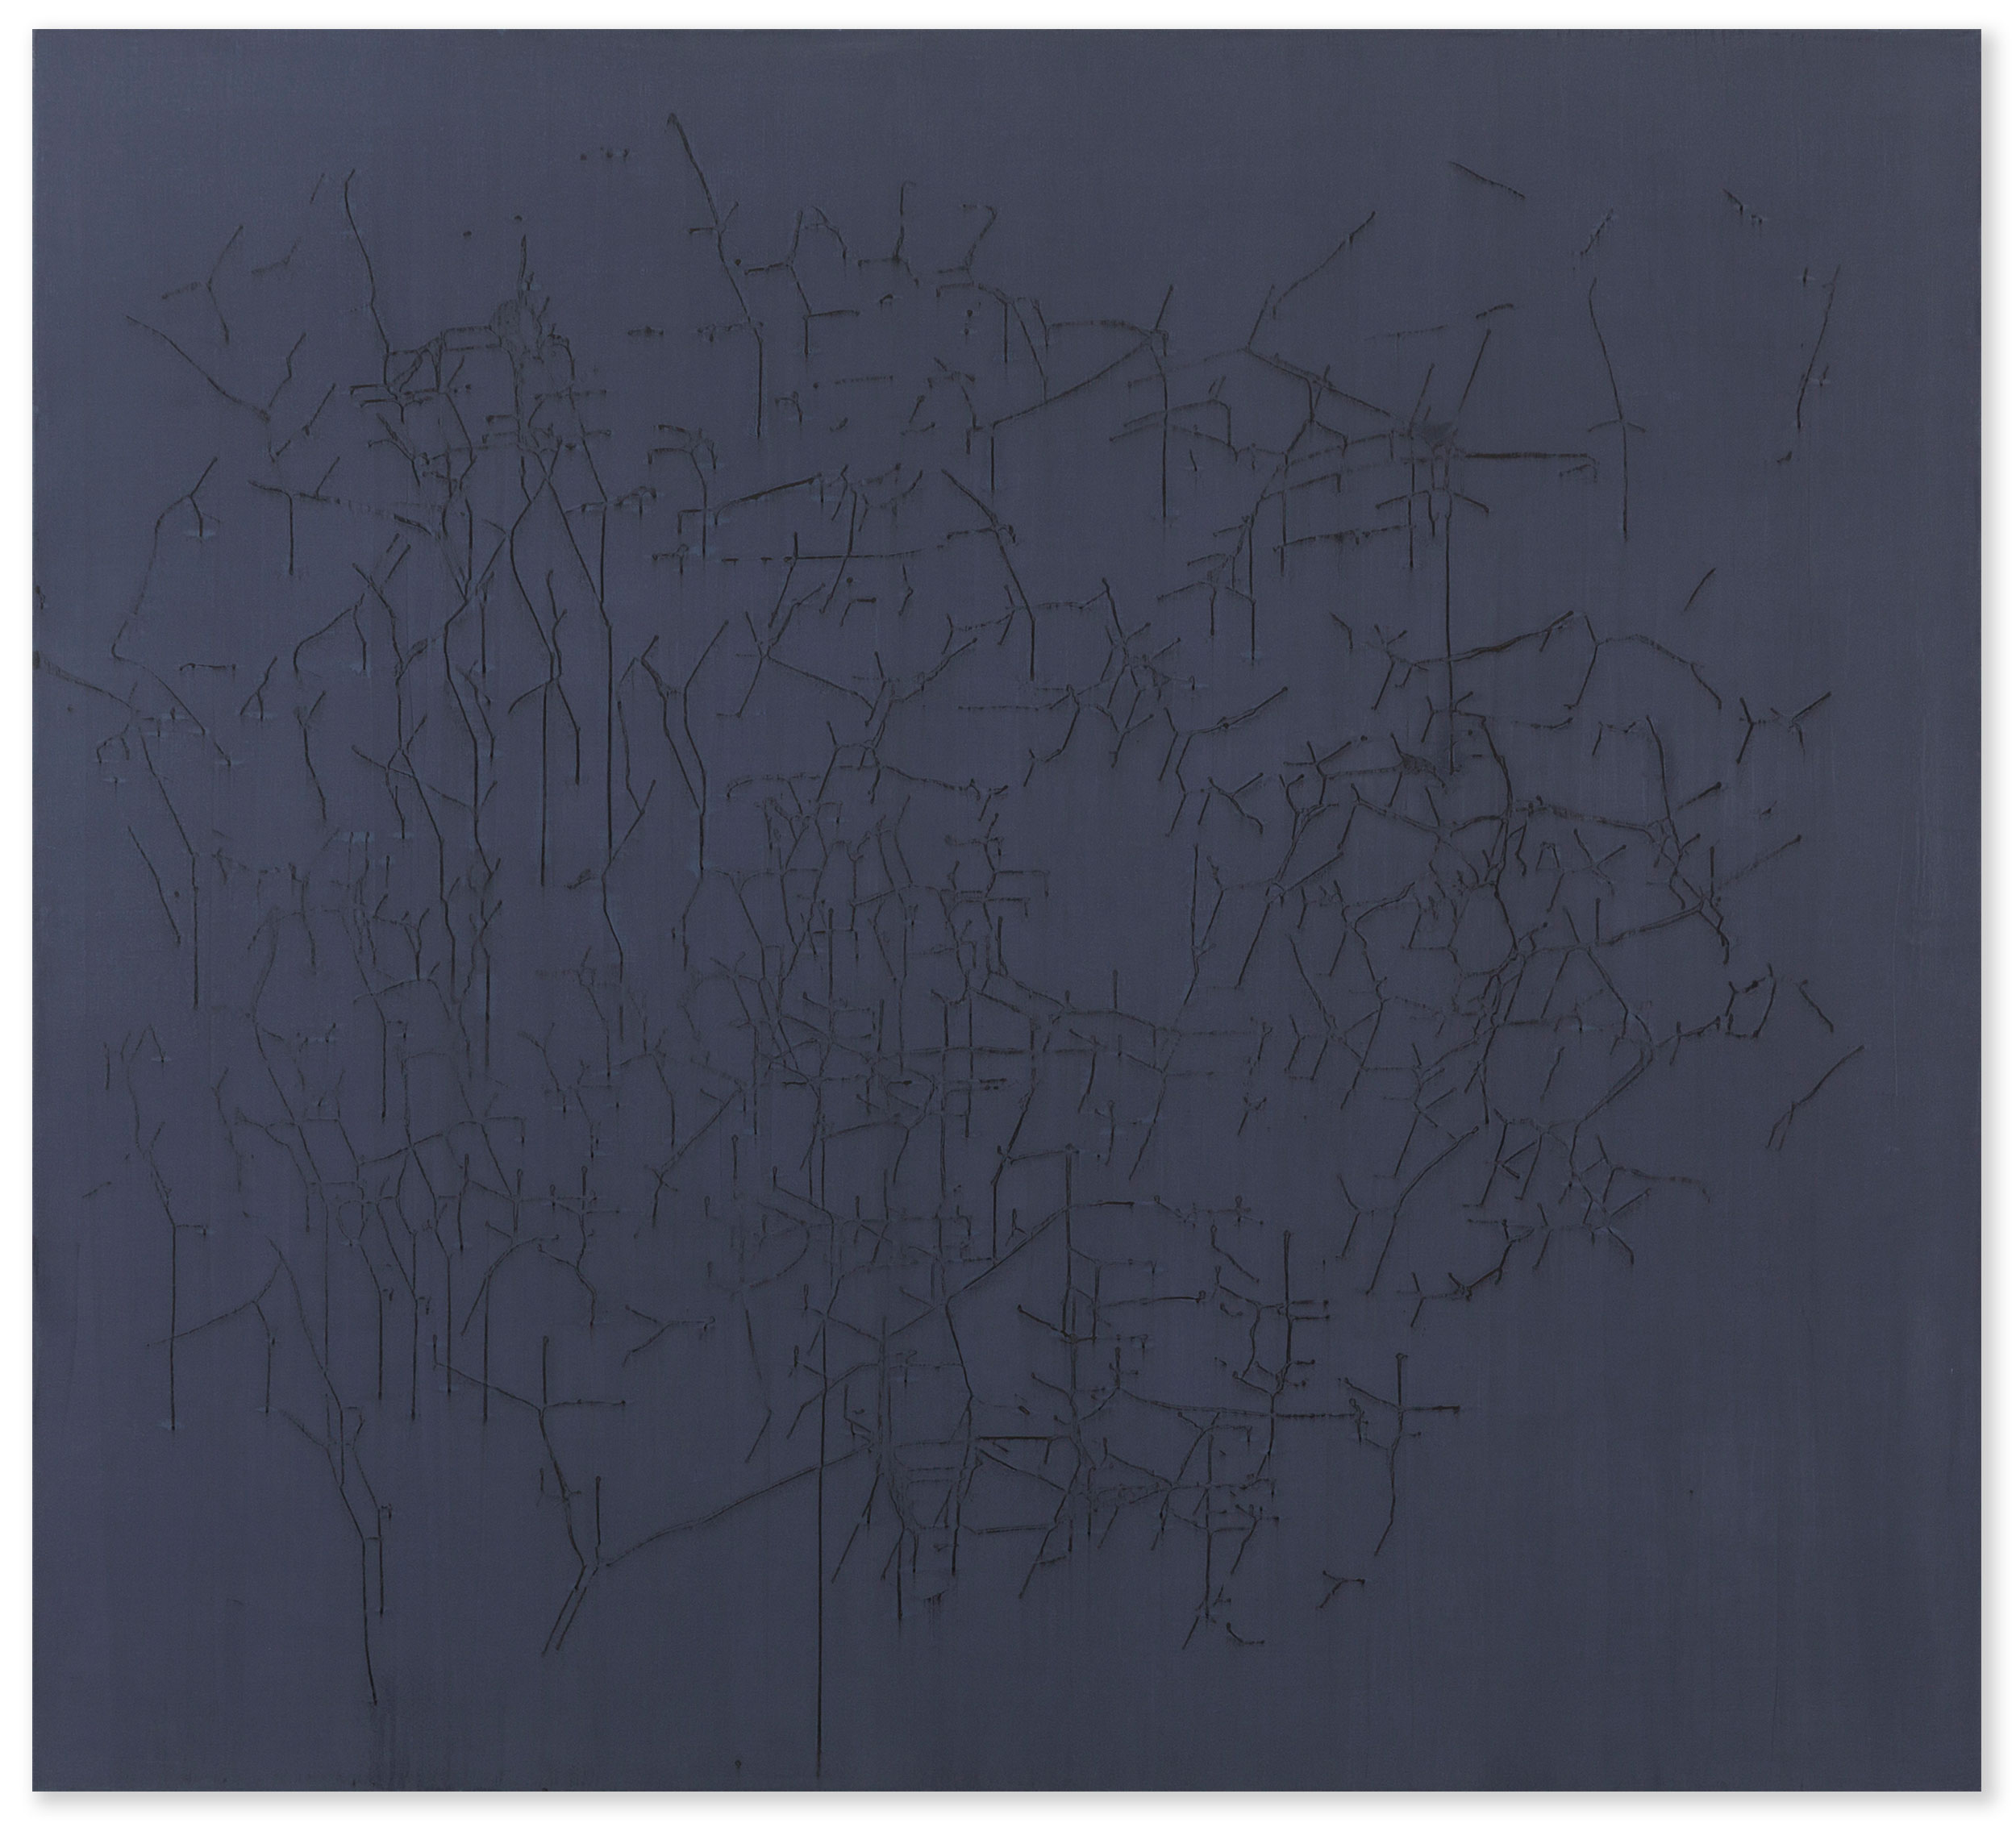 DW K03 / 2015 · egg tempera on canvas · 180 x 200 cm